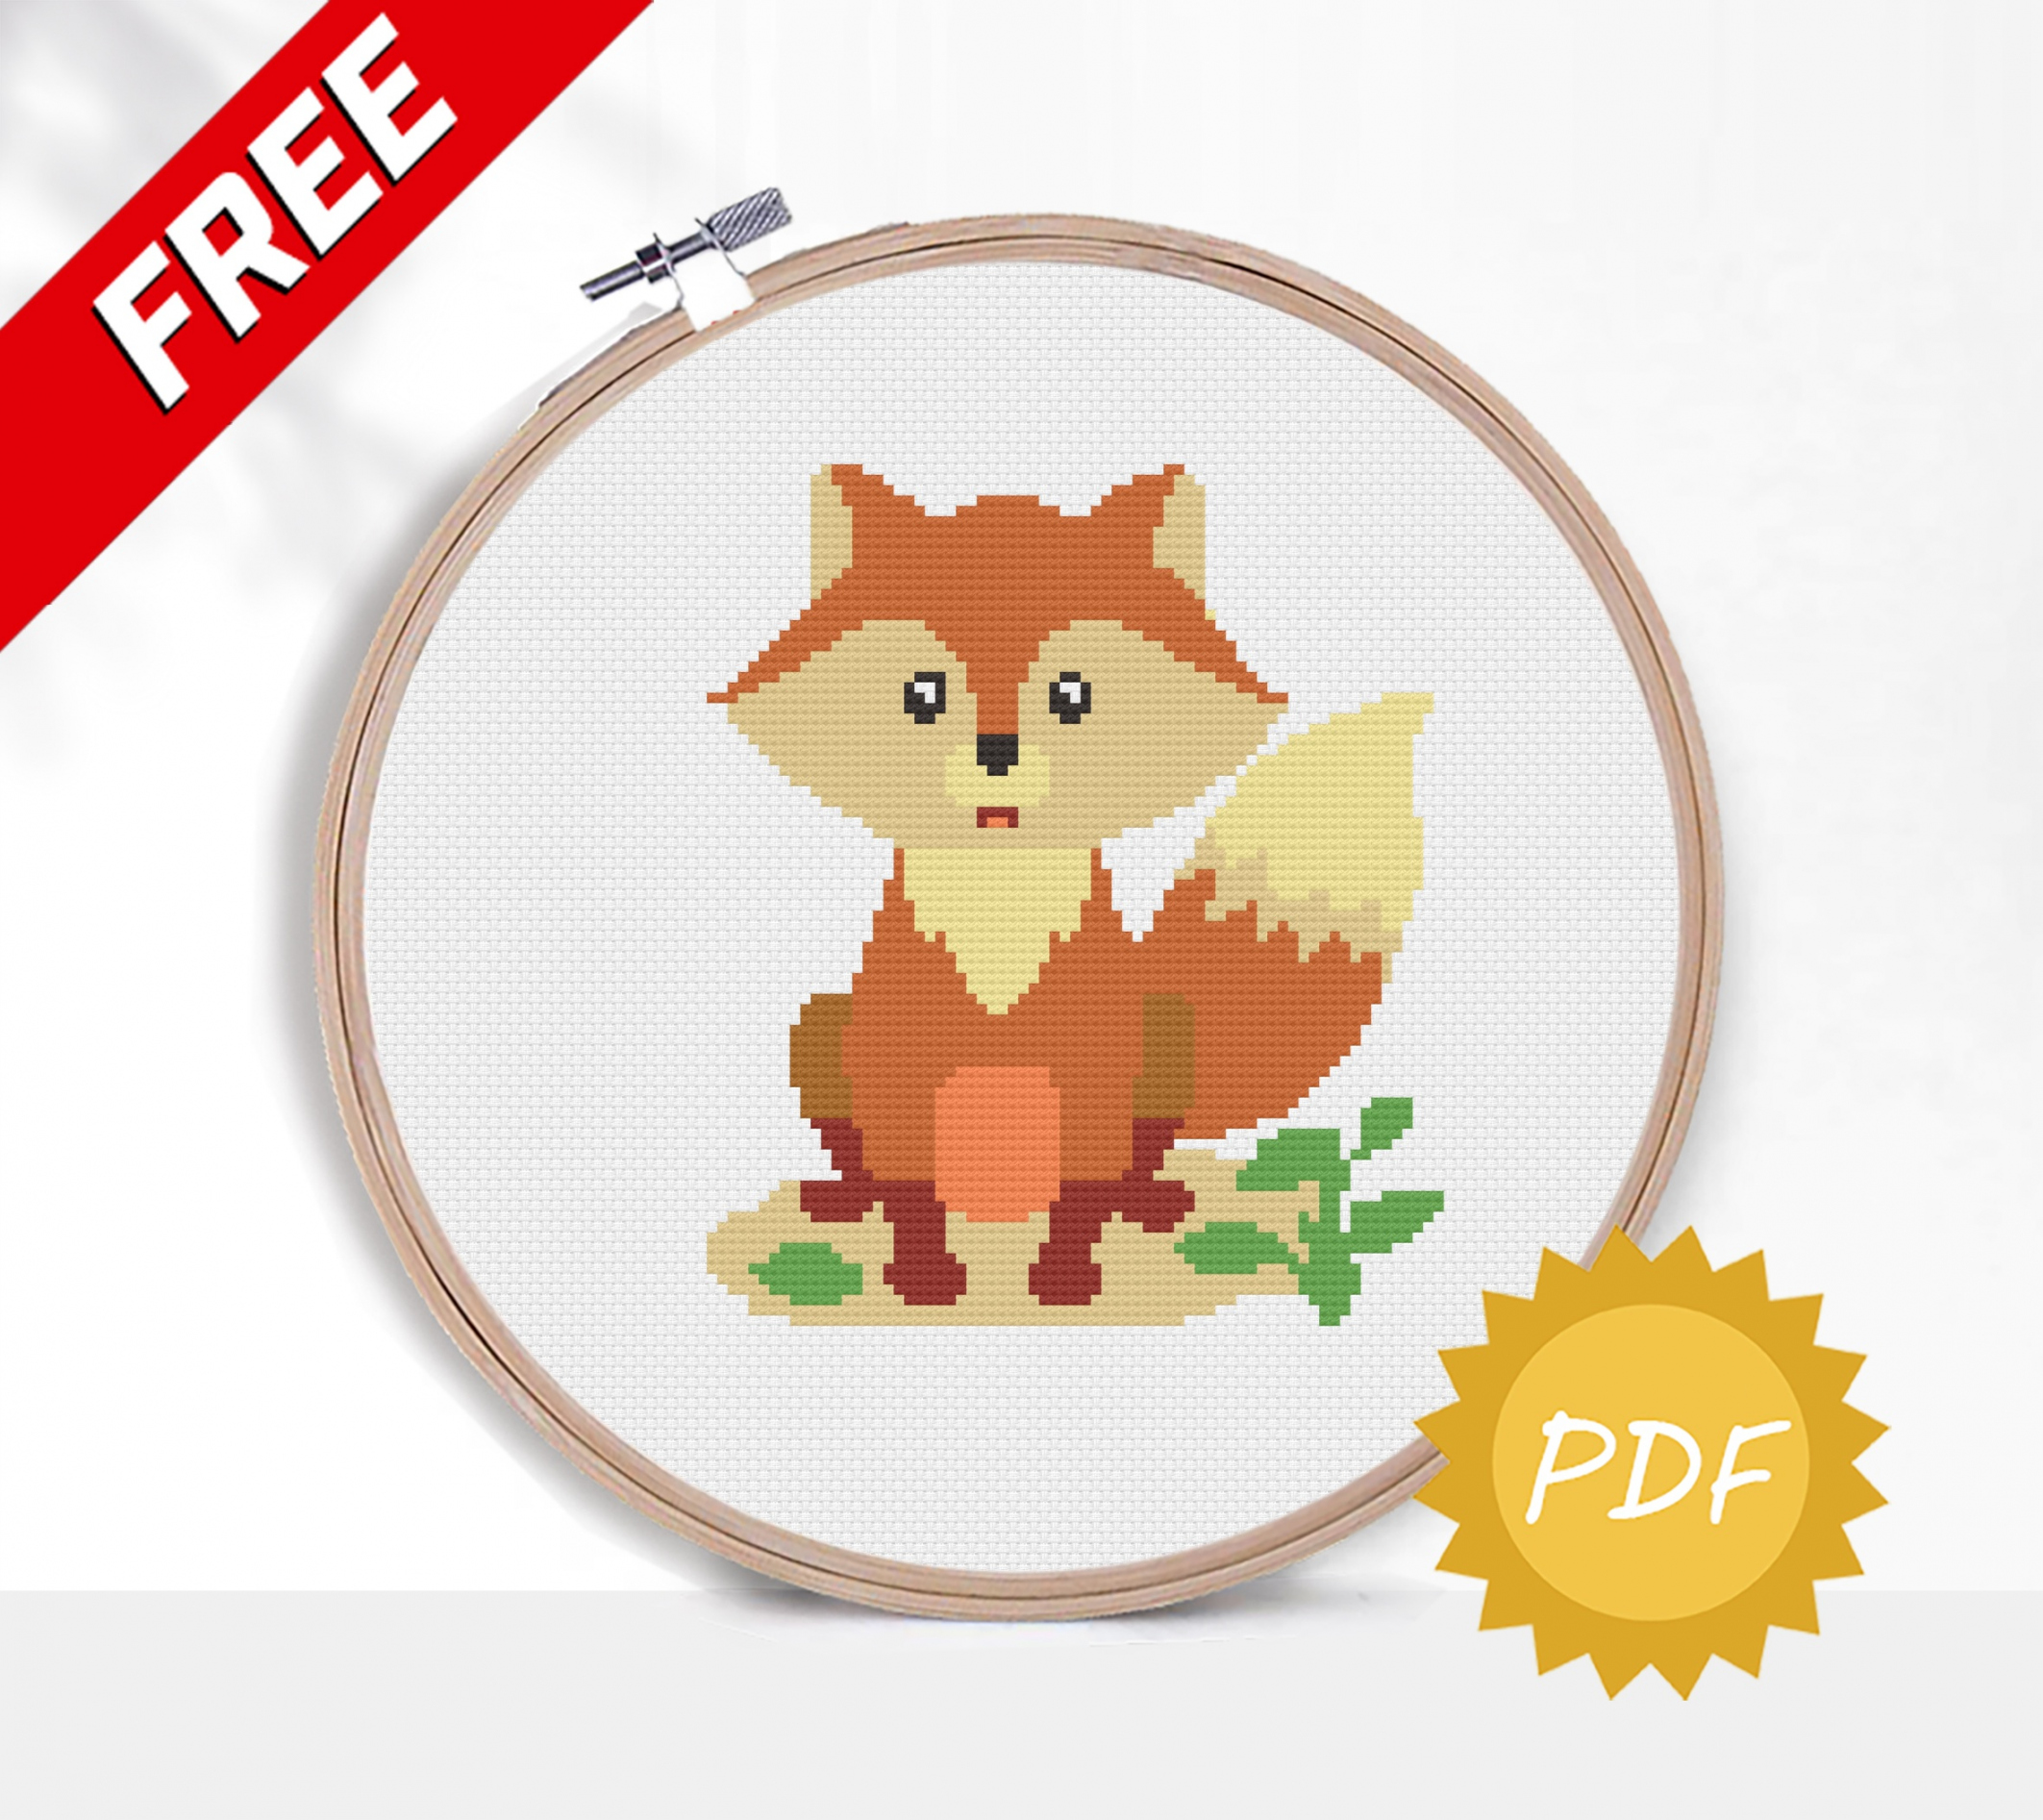 Free Printable Cross Stitch Patterns - Printable - FREE cross stitch animal pattern: Fox - Cheering Studio